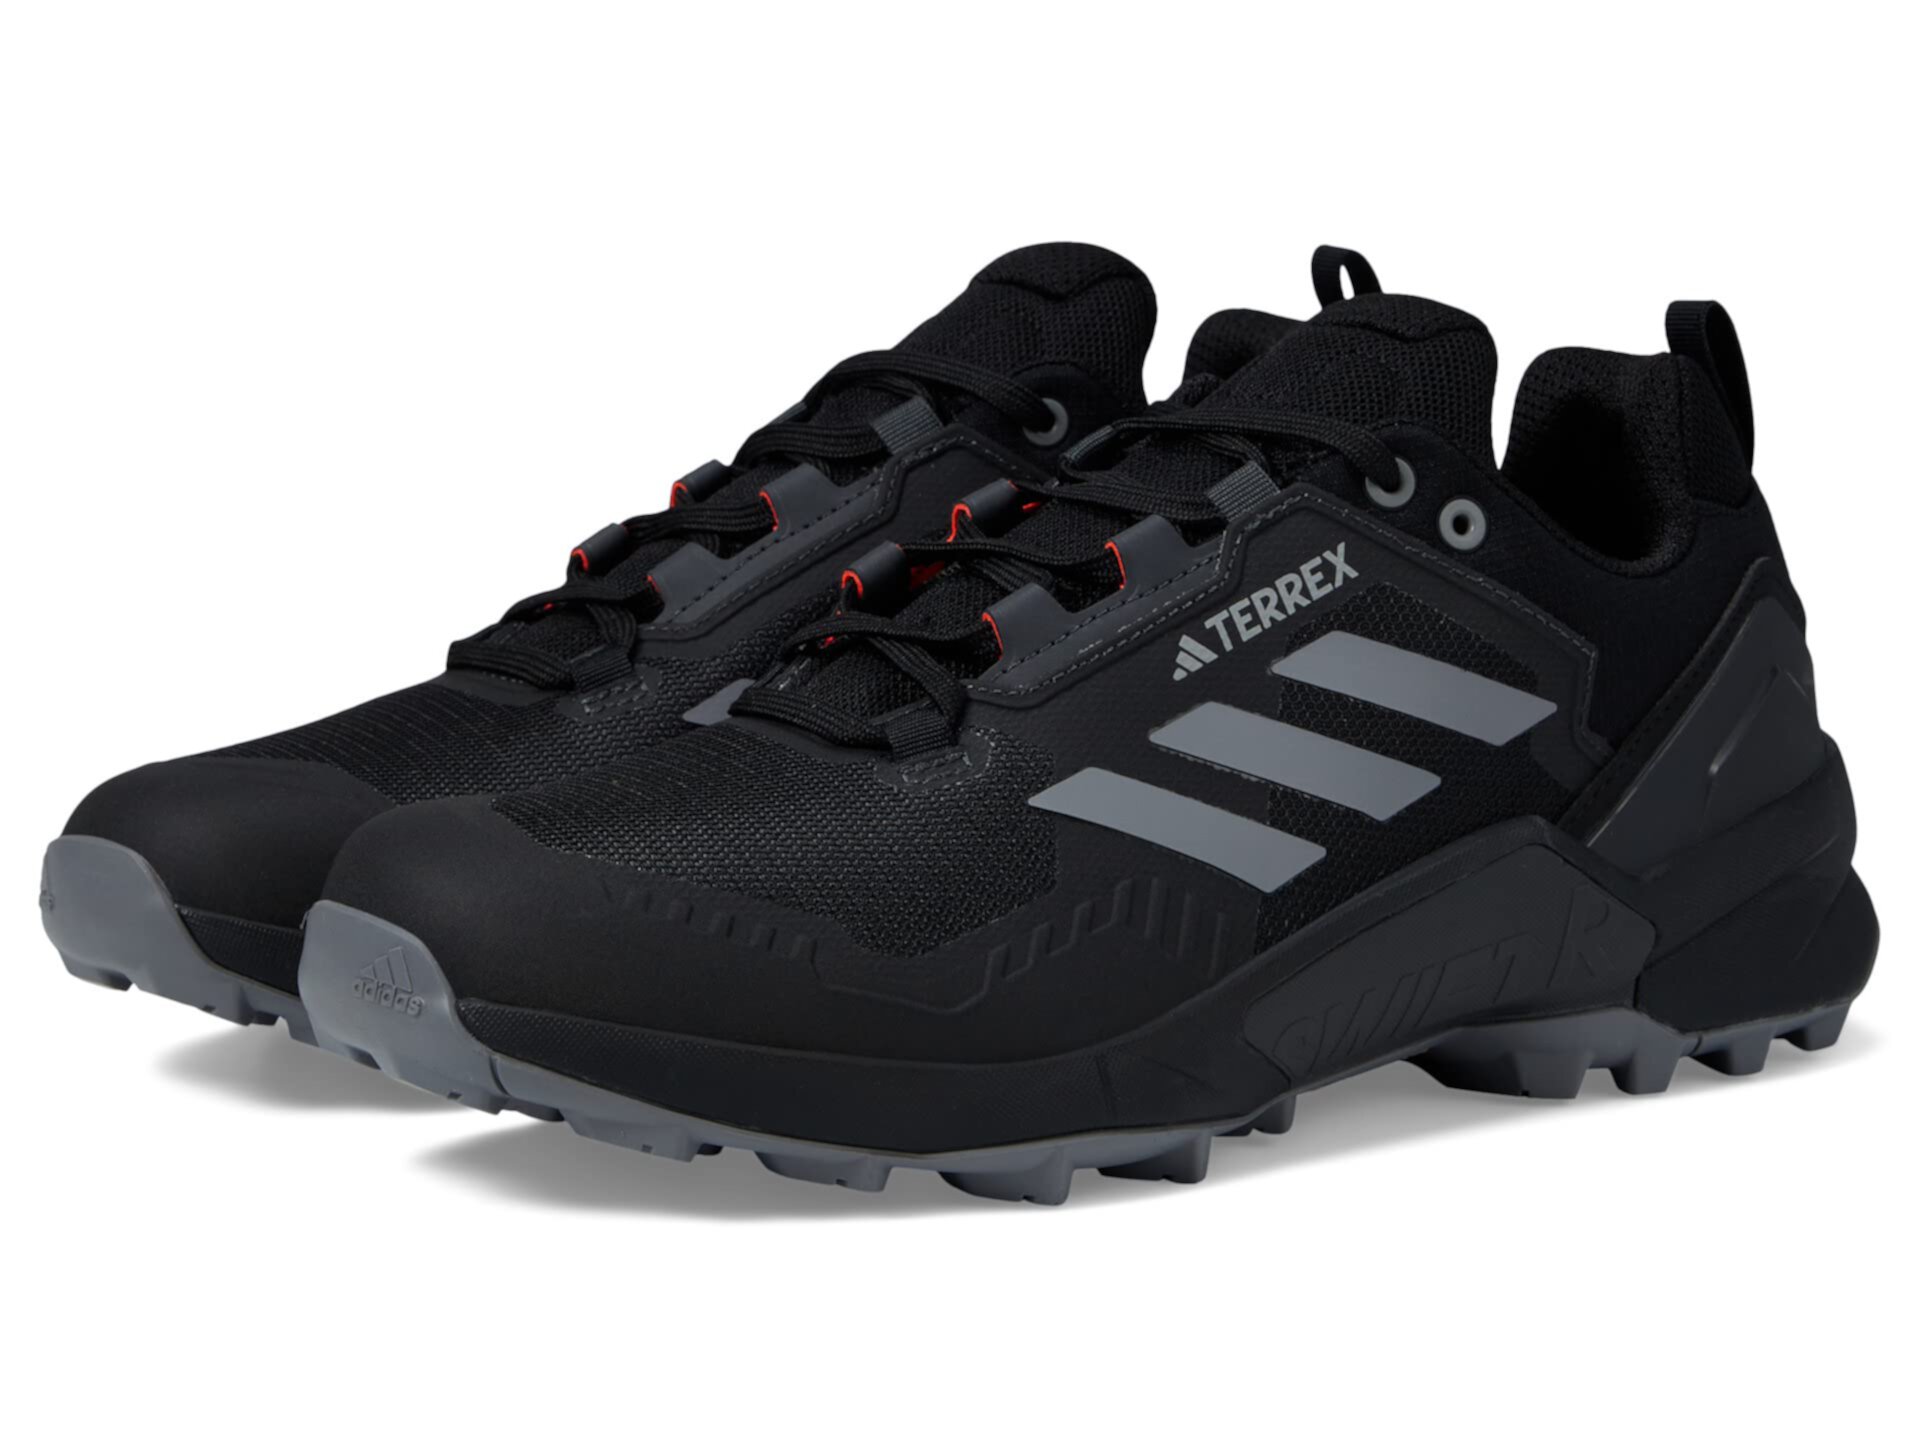 Туристические ботинки Terrex Swift R3 от Adidas для мужчин Adidas